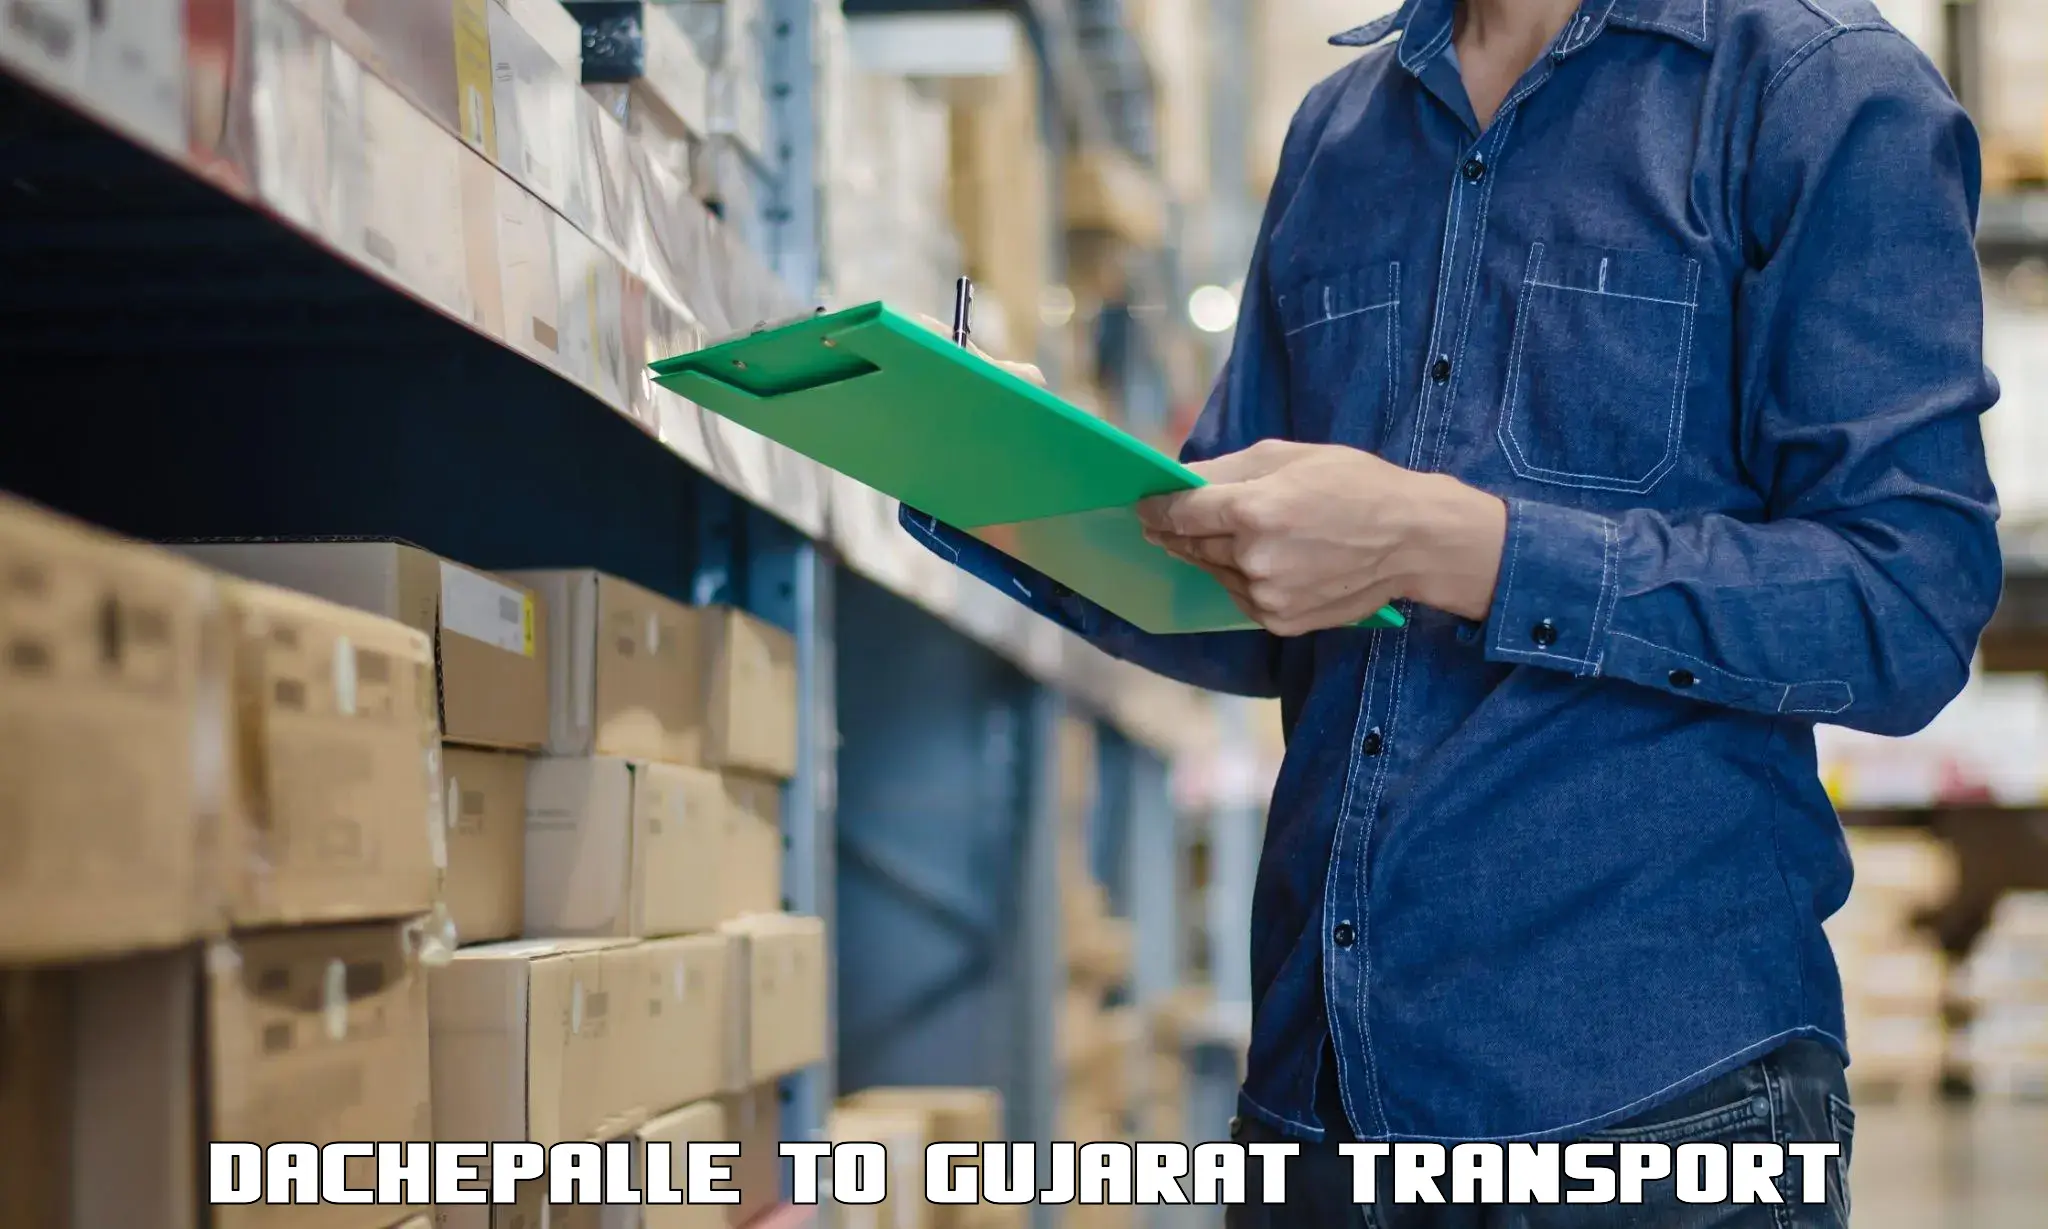 Transport in sharing Dachepalle to Gujarat